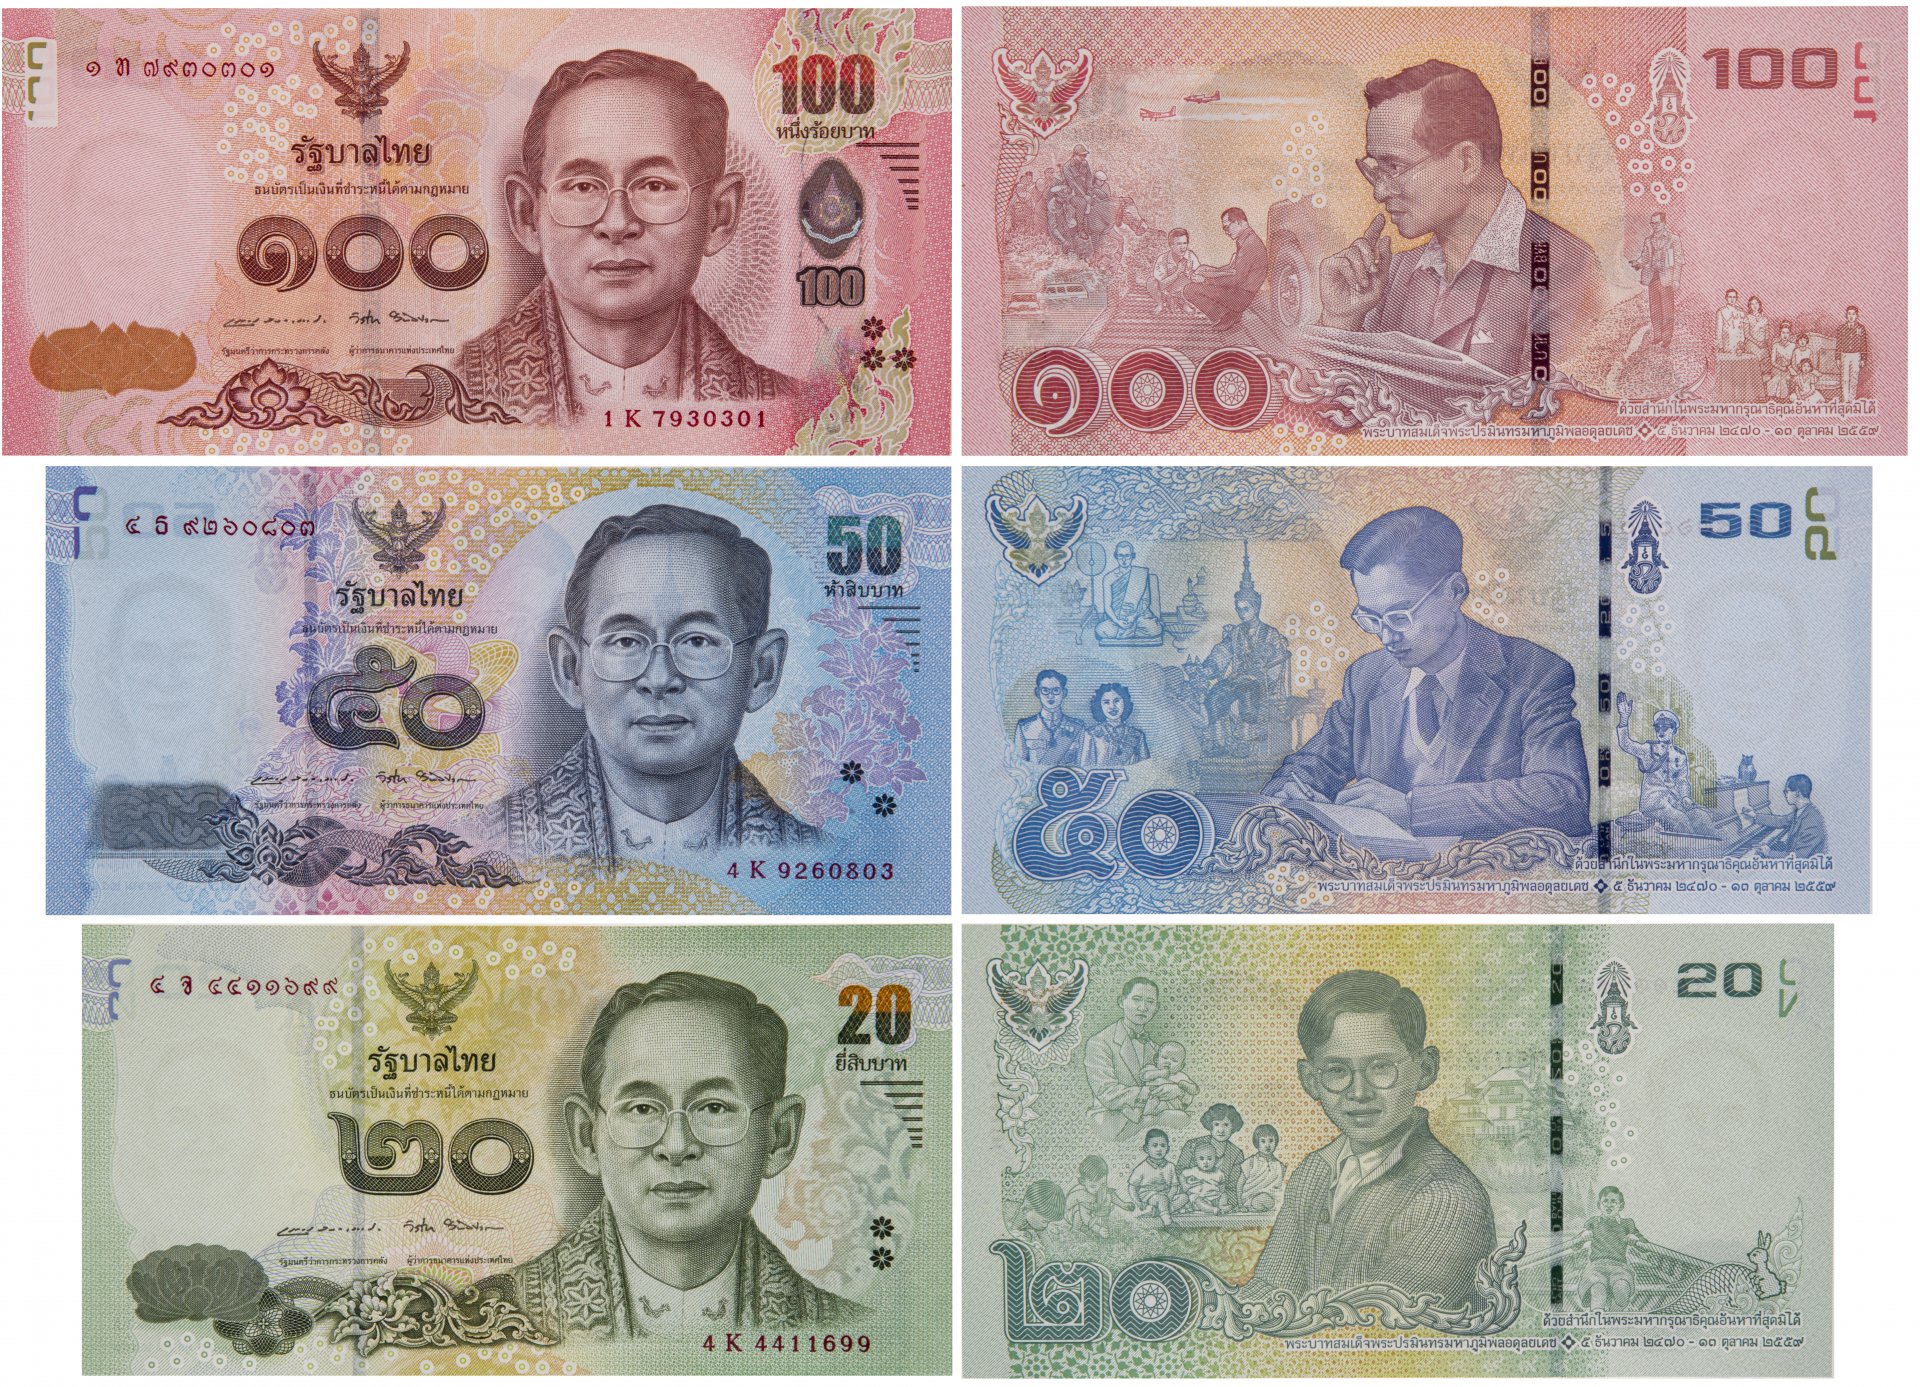 3 бата в рублях. Купюра Тайланда 20. Банкноты Таиланда 20 бат. Банкноты Тайланда 100 бат. Купюра 100 бат Таиланд.